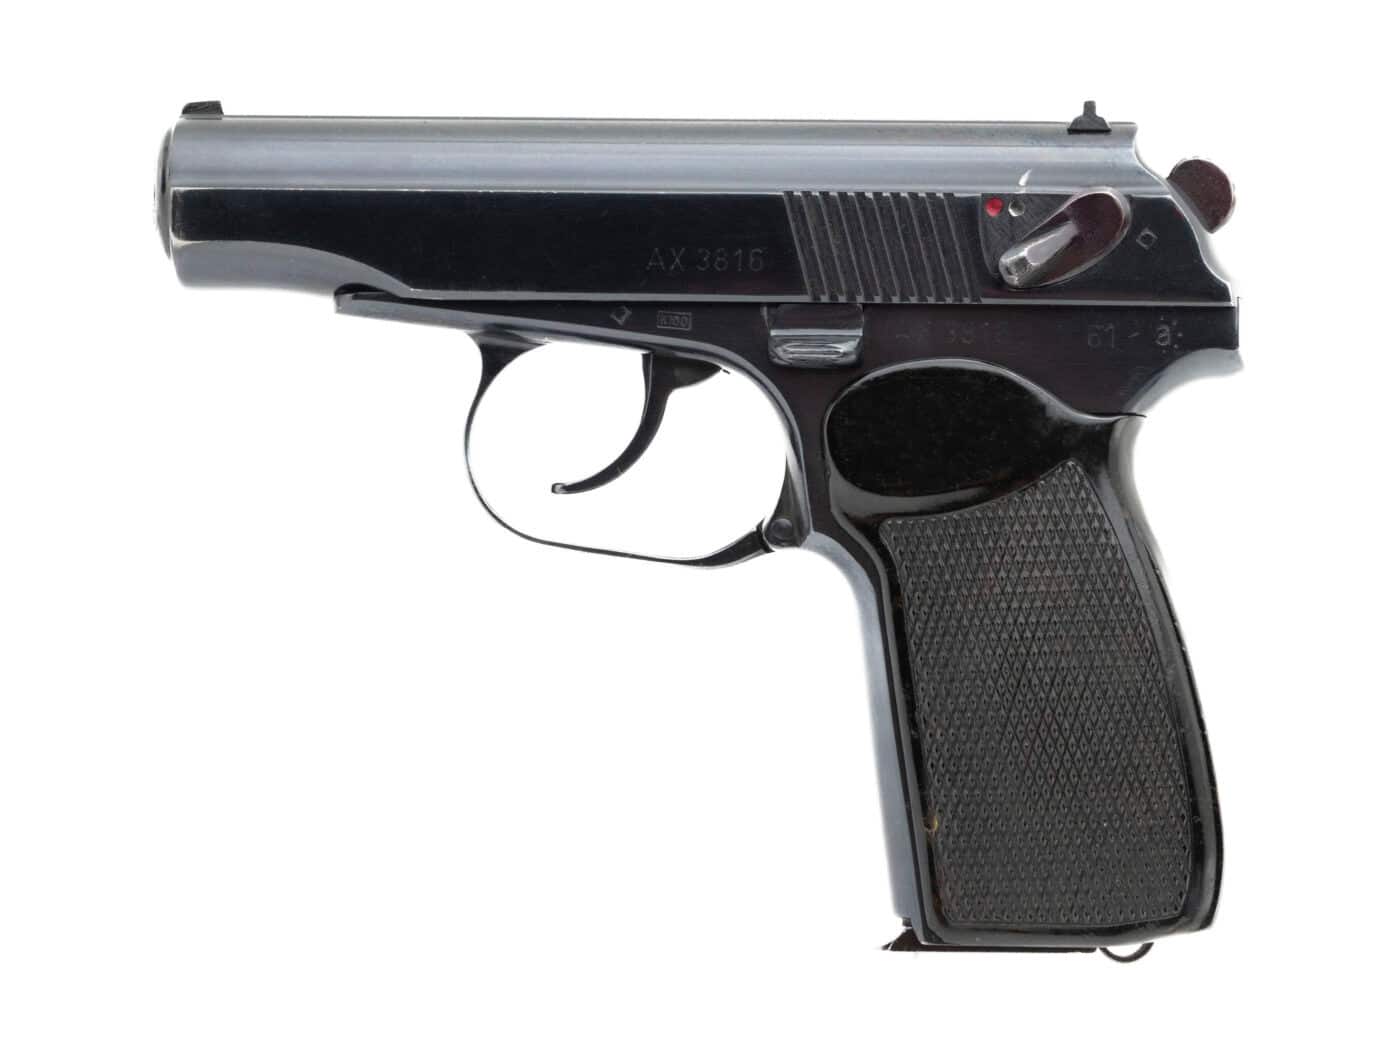 East German Makarov pistol